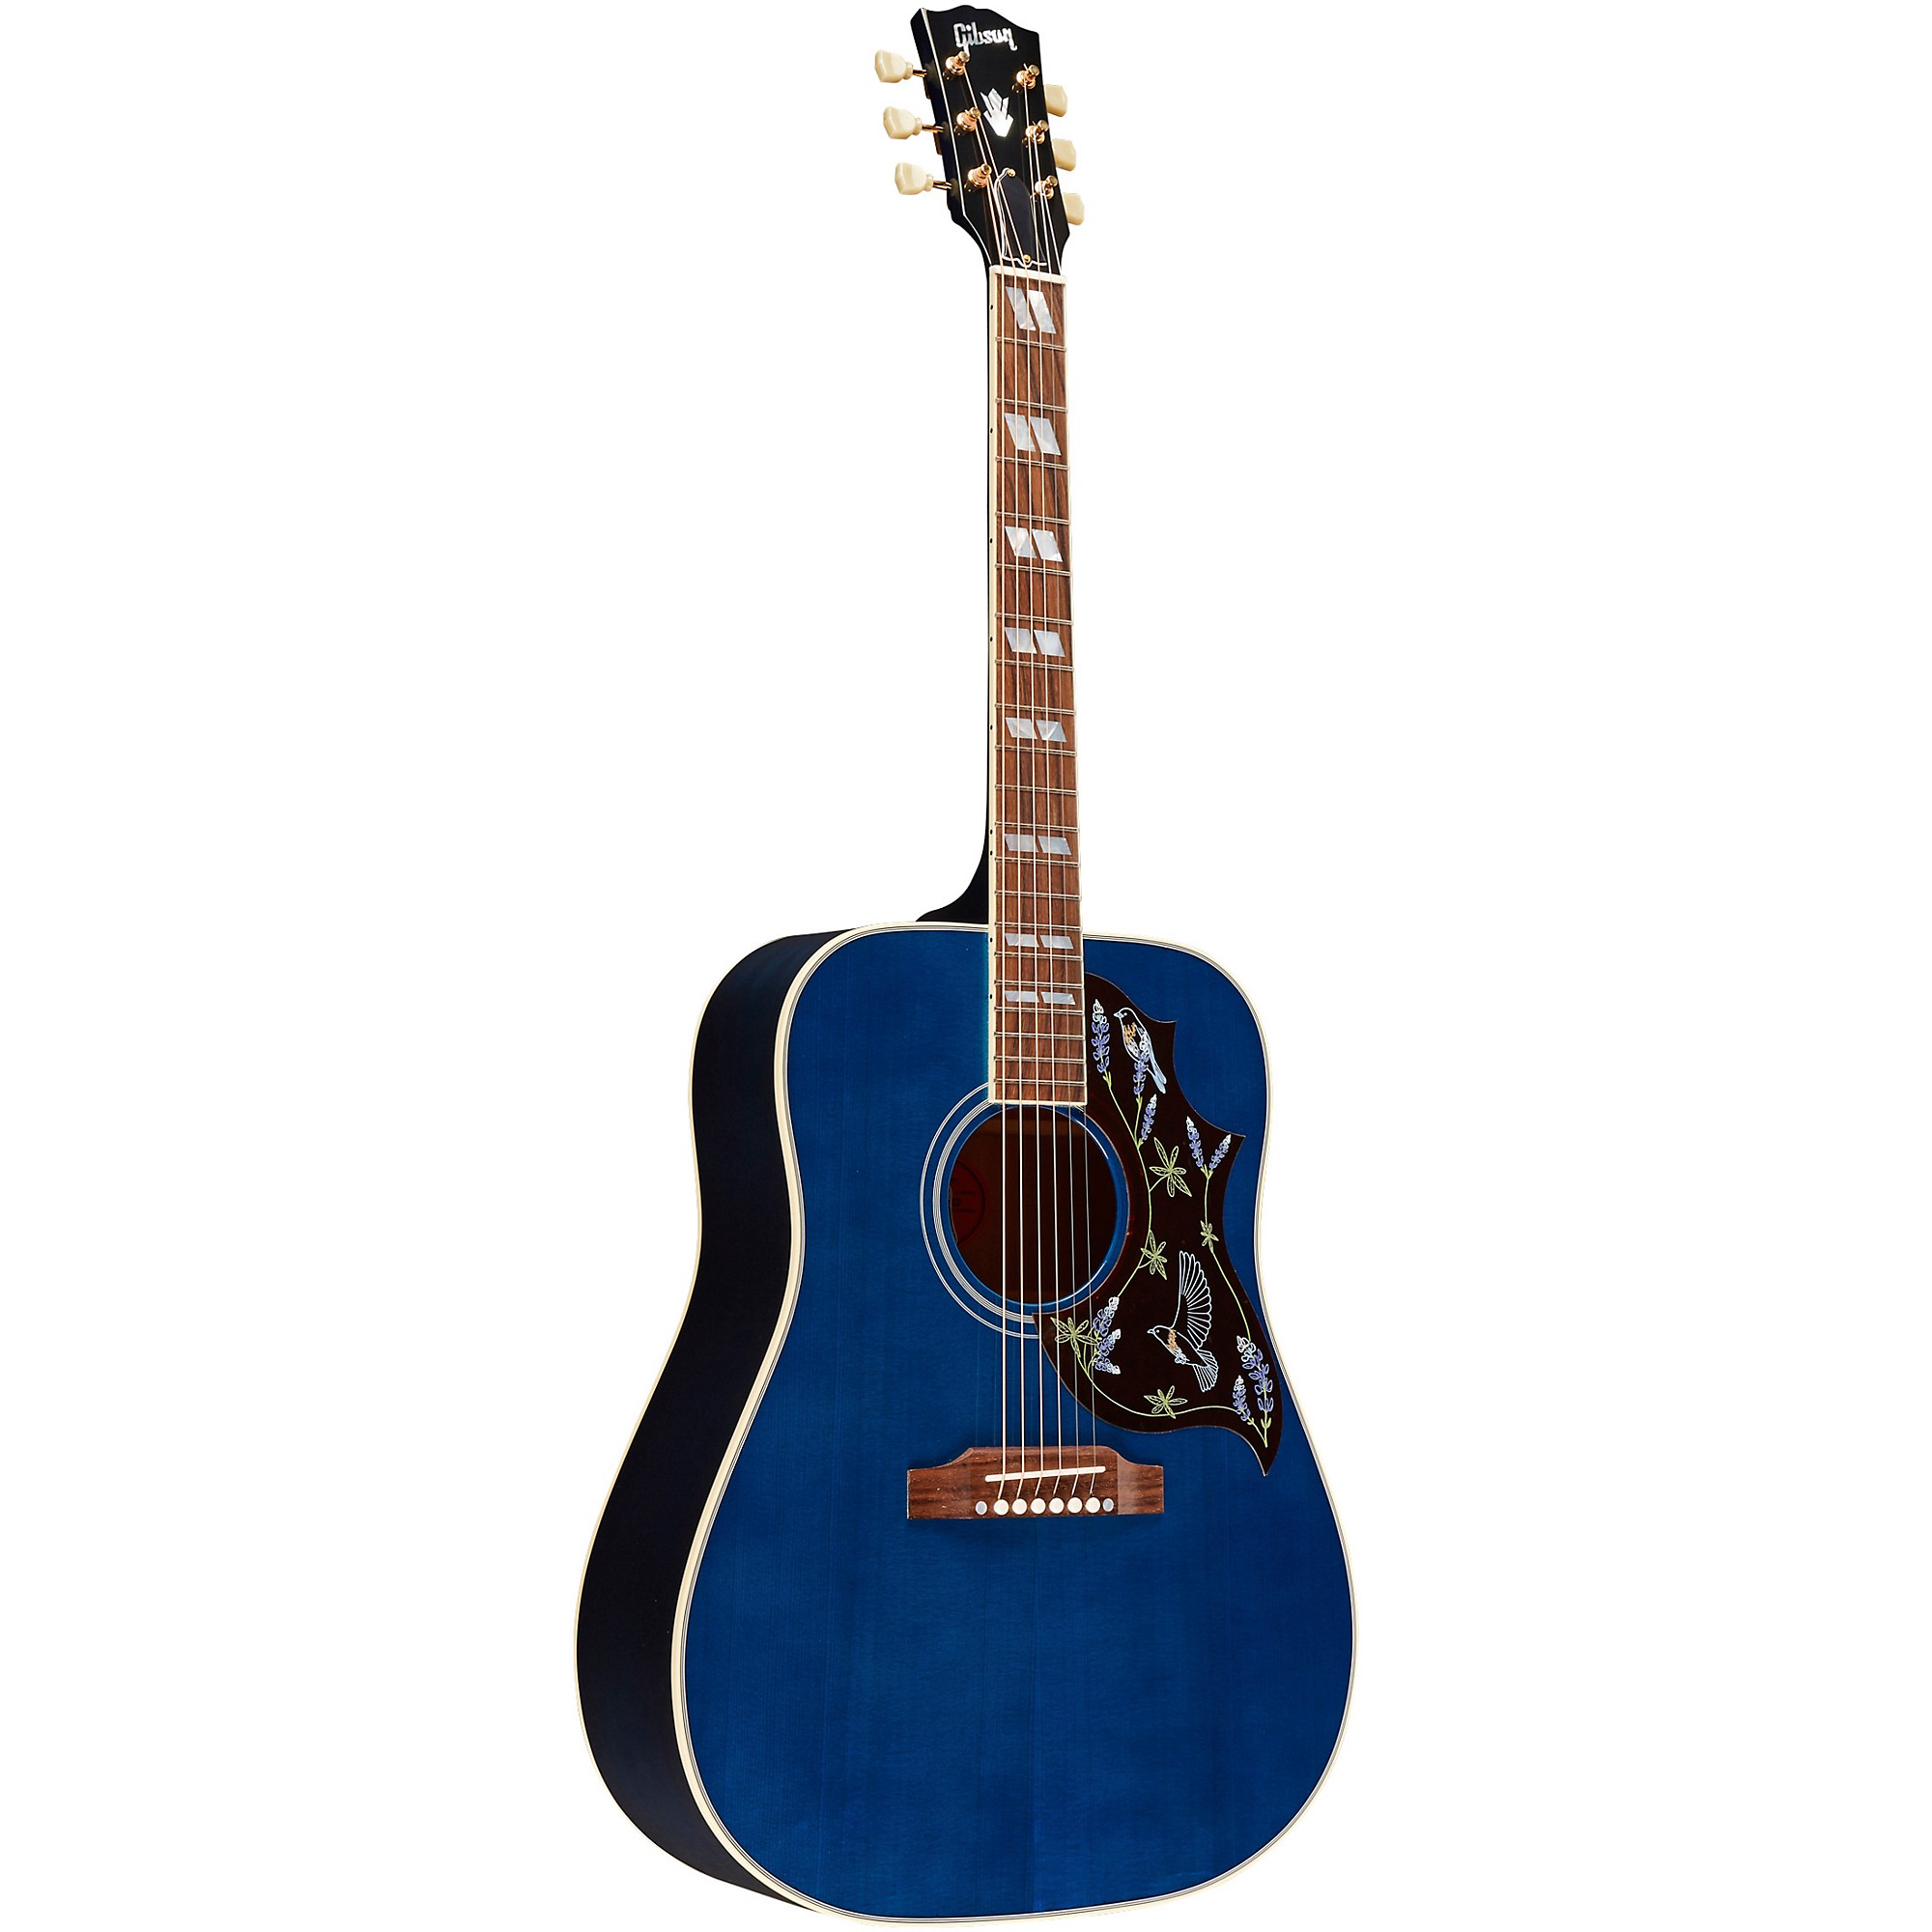 Акустически-электрическая гитара Gibson Miranda Lambert Bluebird Signature Bluebonnet акустическая гитара gibson miranda lambert bluebird 2023 bluebonnet